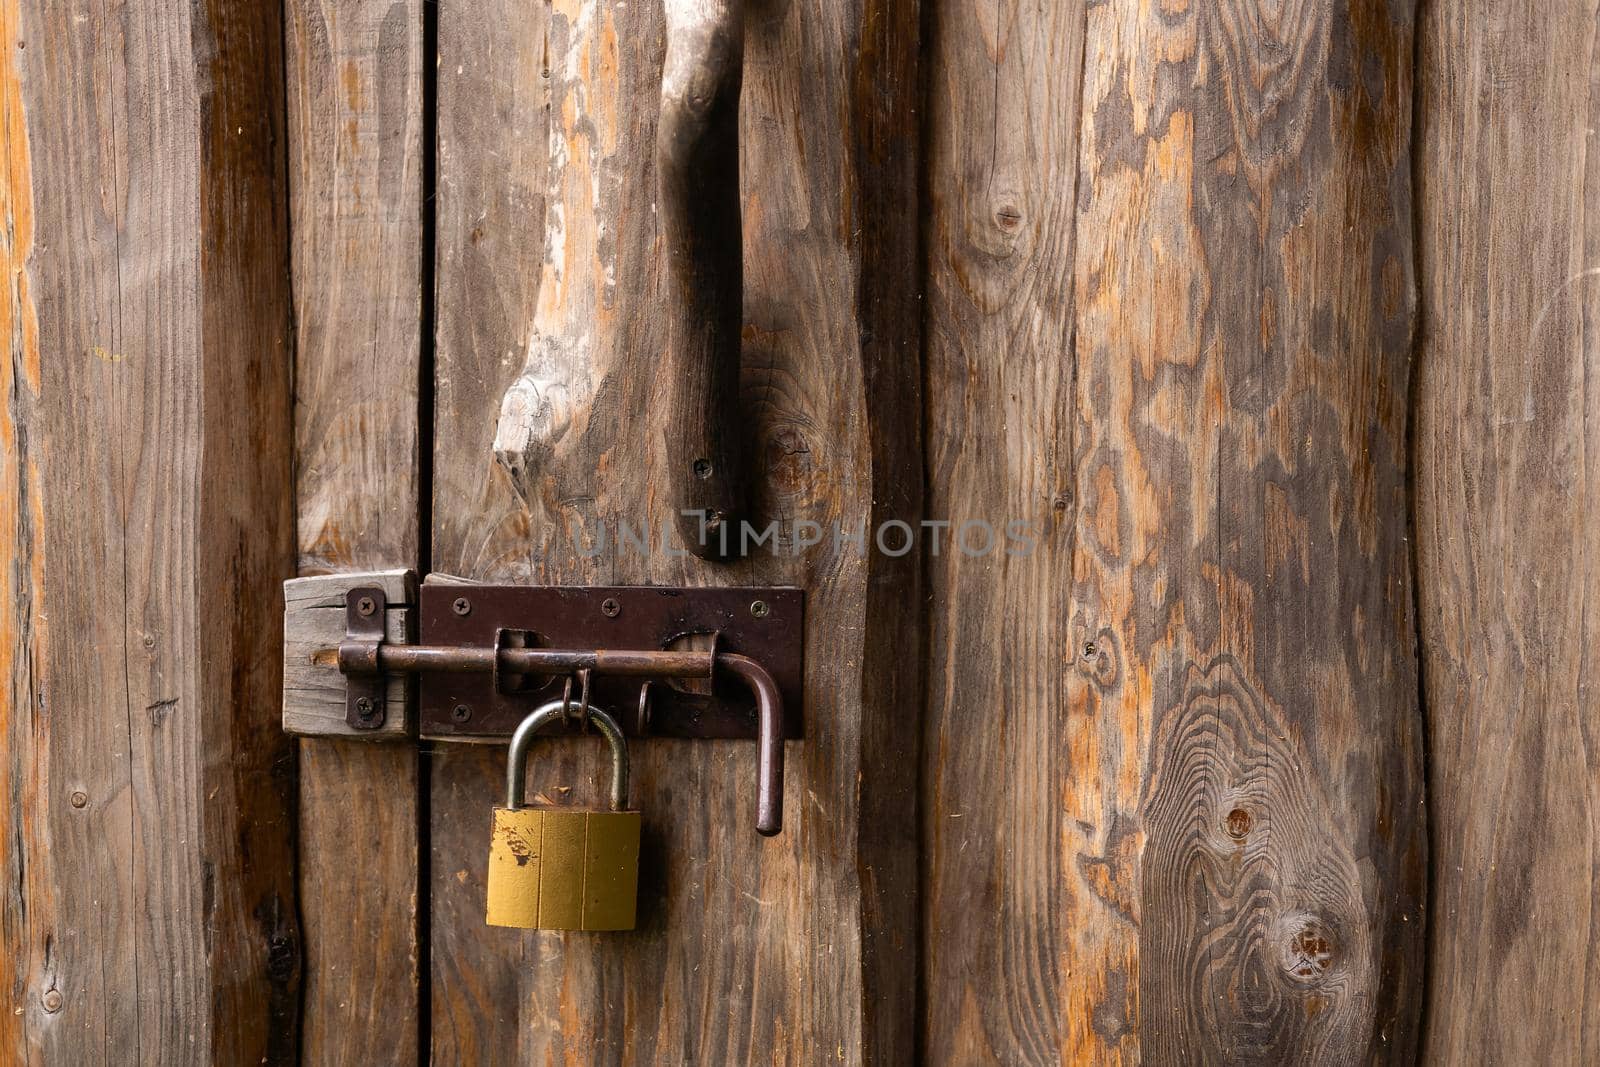 Old padlock on a wooden door by Andelov13